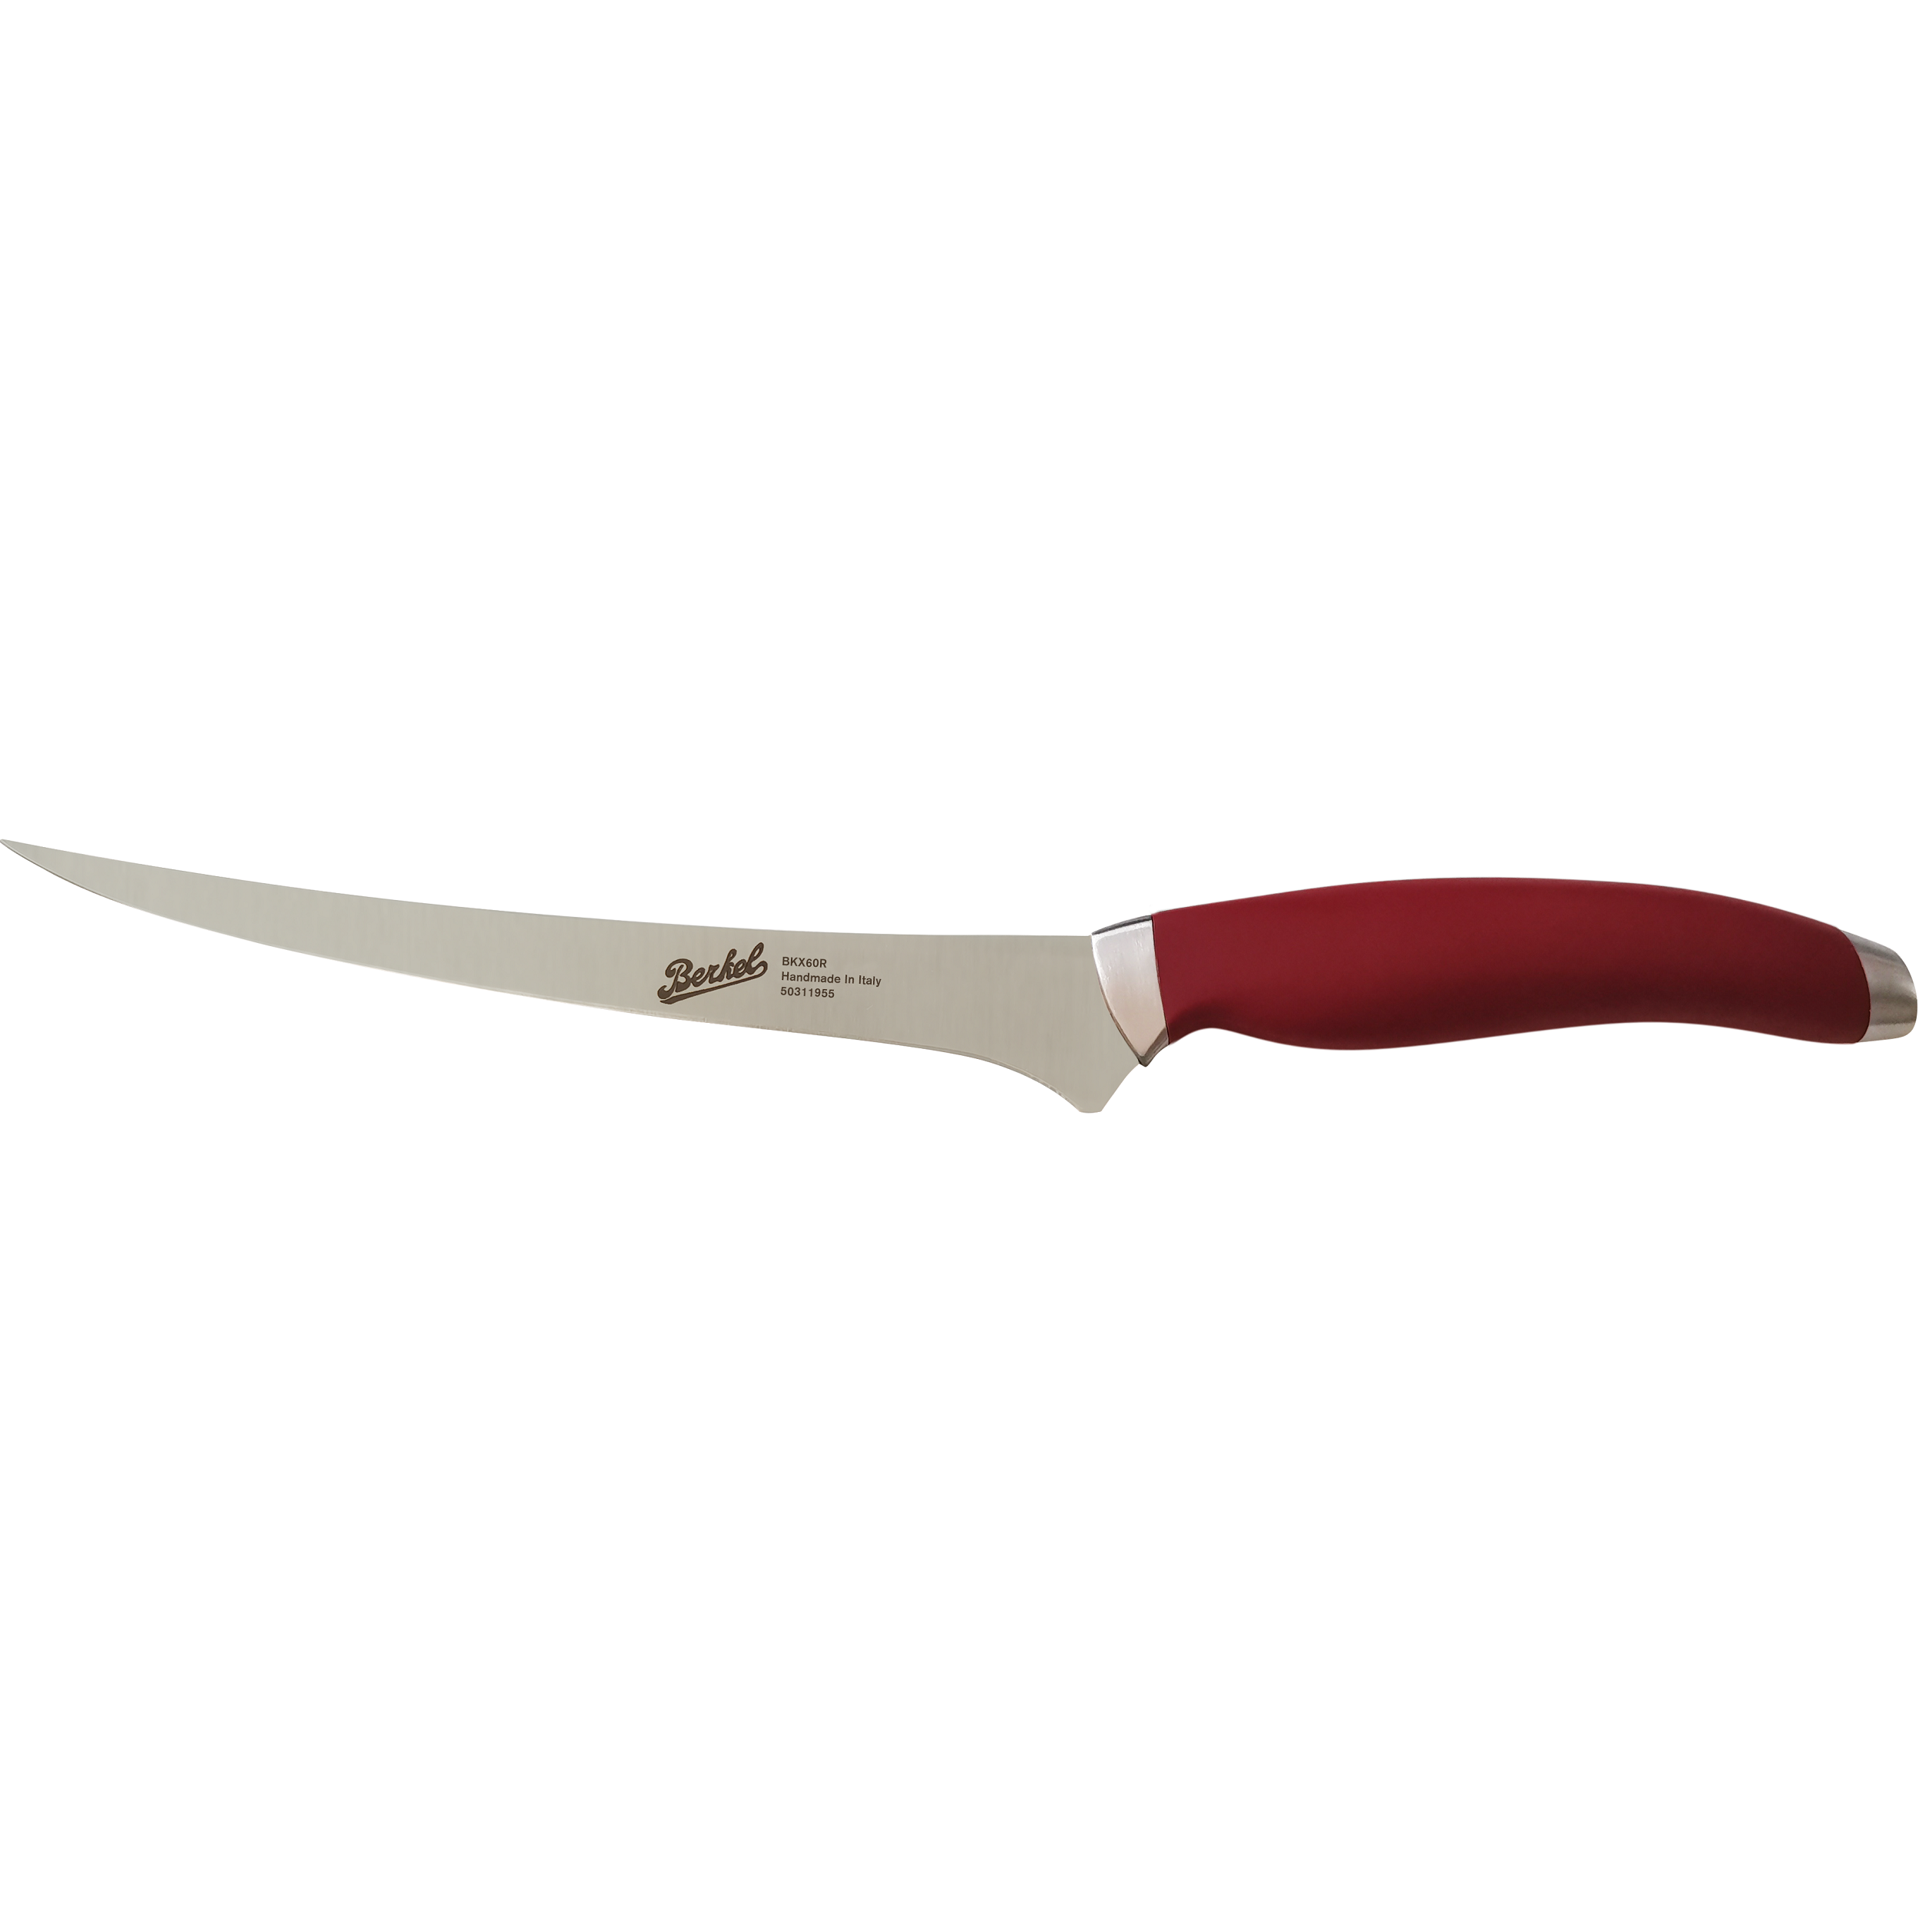 Berkel Teknica Fillet knife 19 cm Red